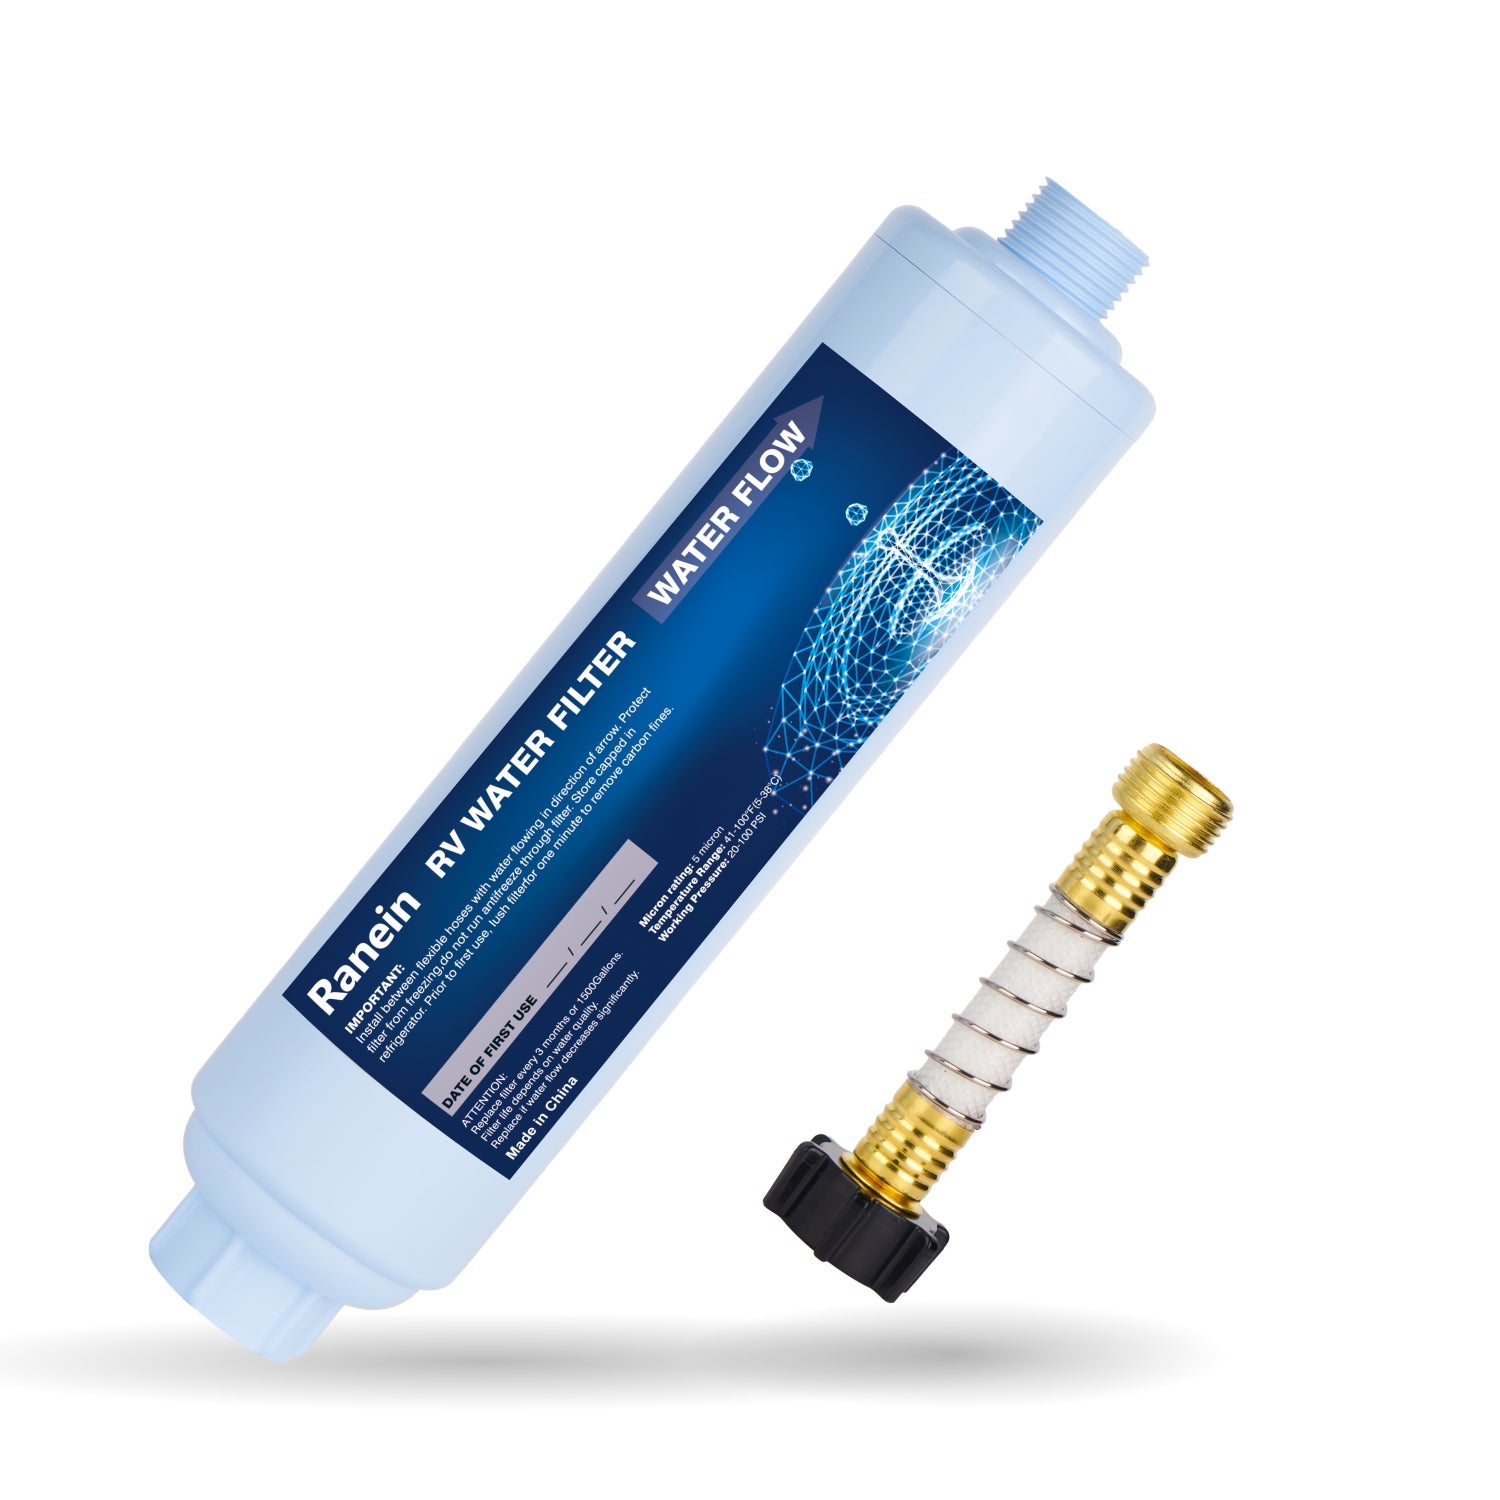 RV Inline Water Filter w/Hose Protector Reduces Bad Taste,Odor in Drinking  Water